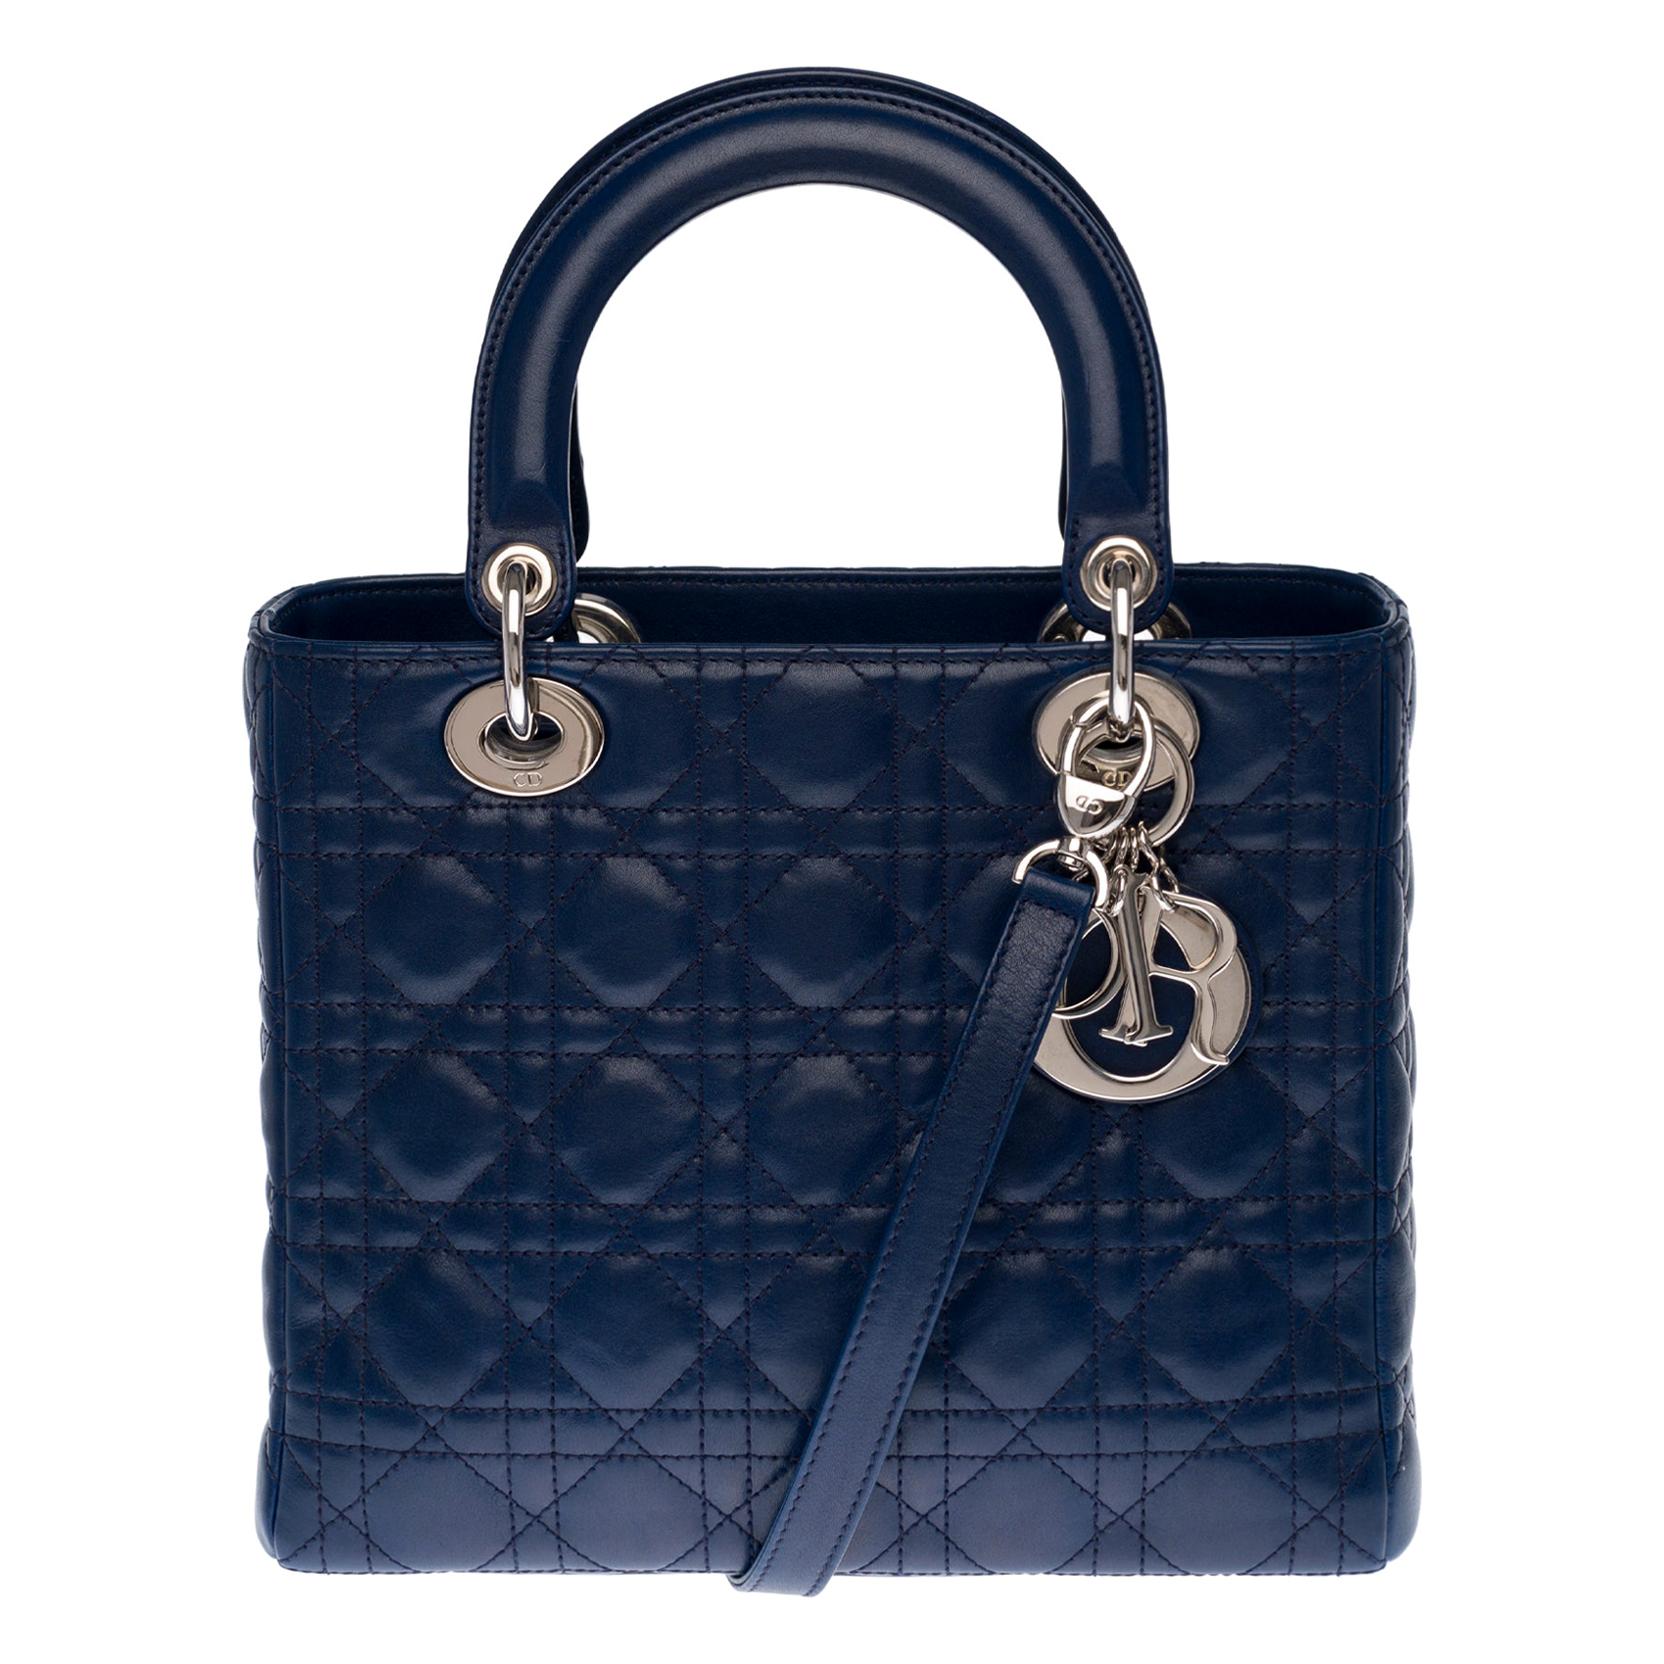 Dior Laurge Size Navy Blue Gift Bag W/Metal Star Charm & White